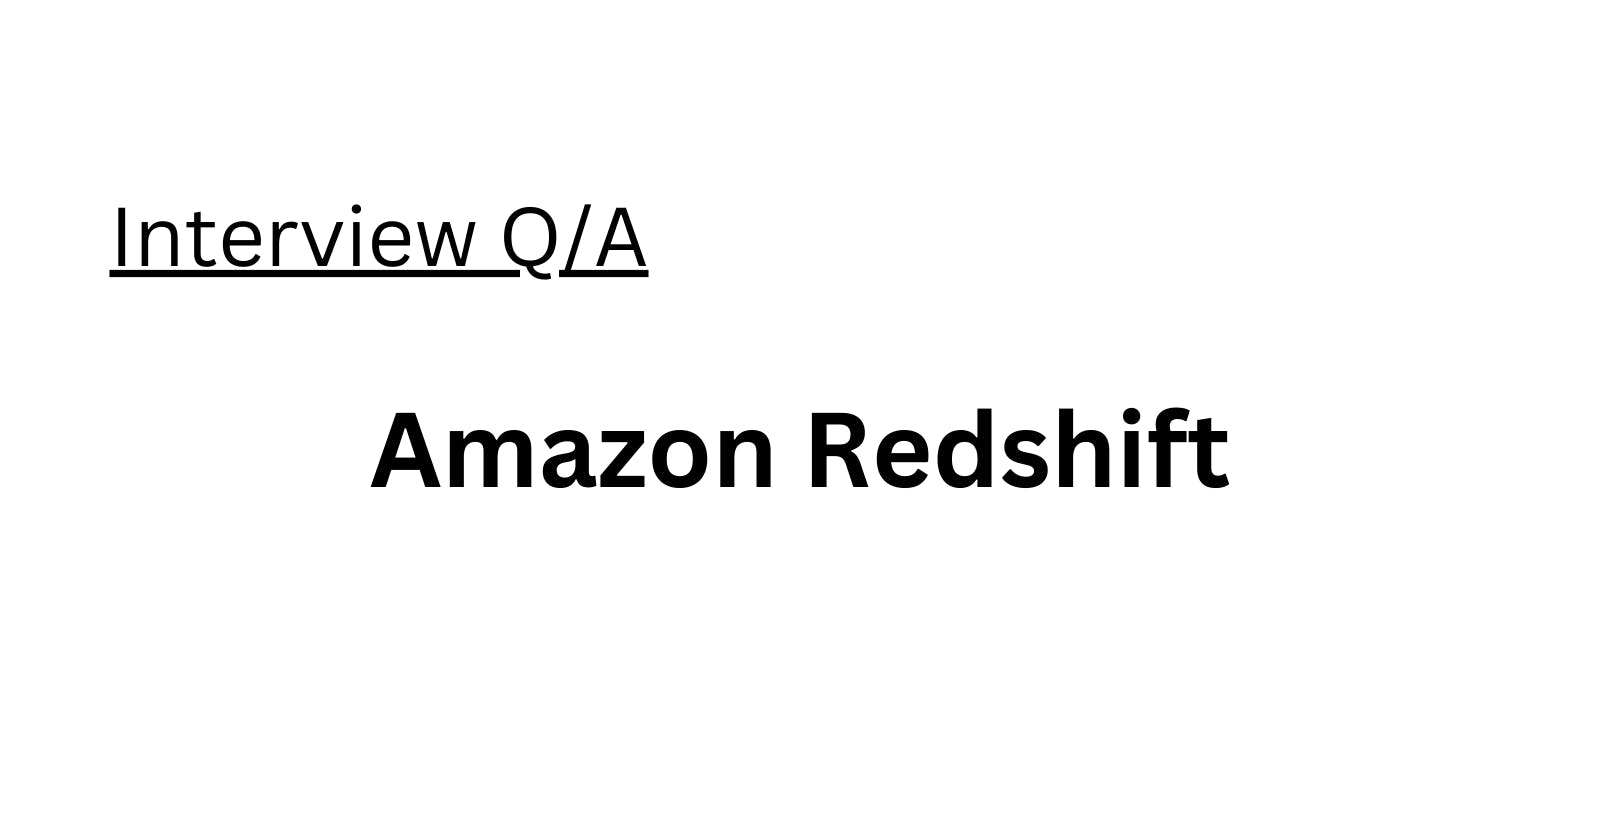 Amazon Redshift Interview Q/A